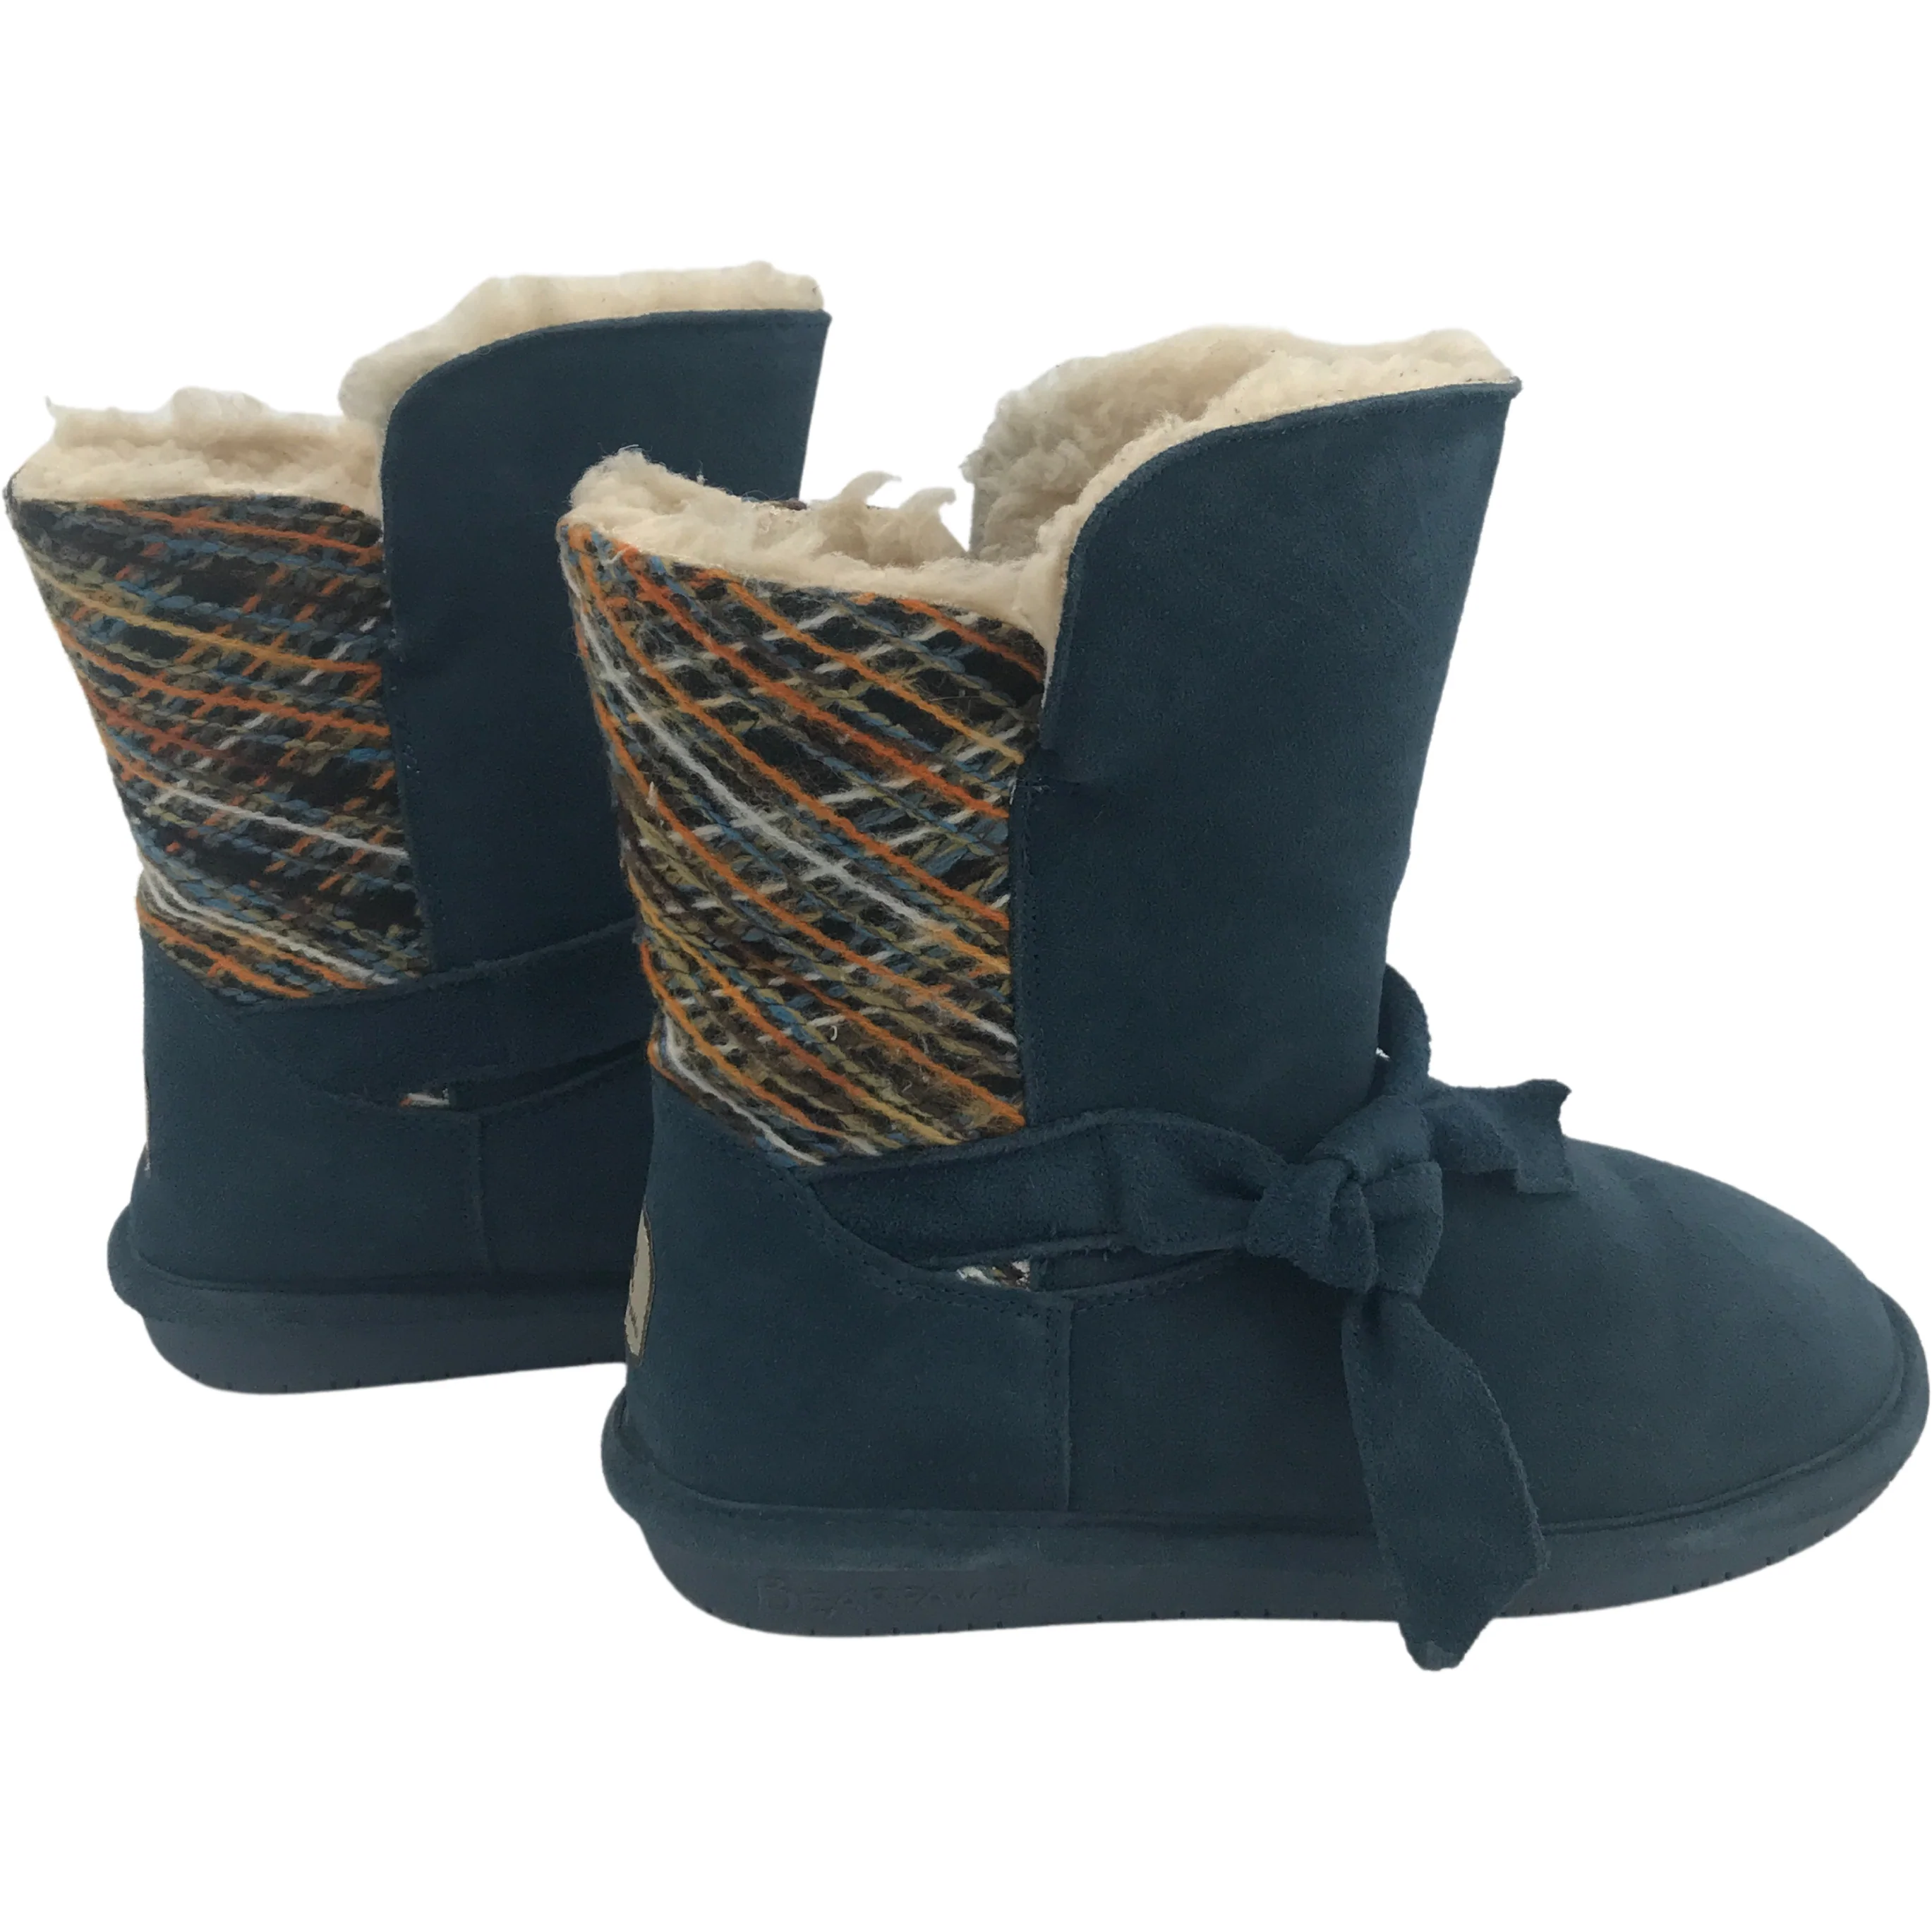 BearPaw Women's Winter Boots / Short Winter Boots / Geneva Knitted Boots / Navy / Size 9 **WORN**